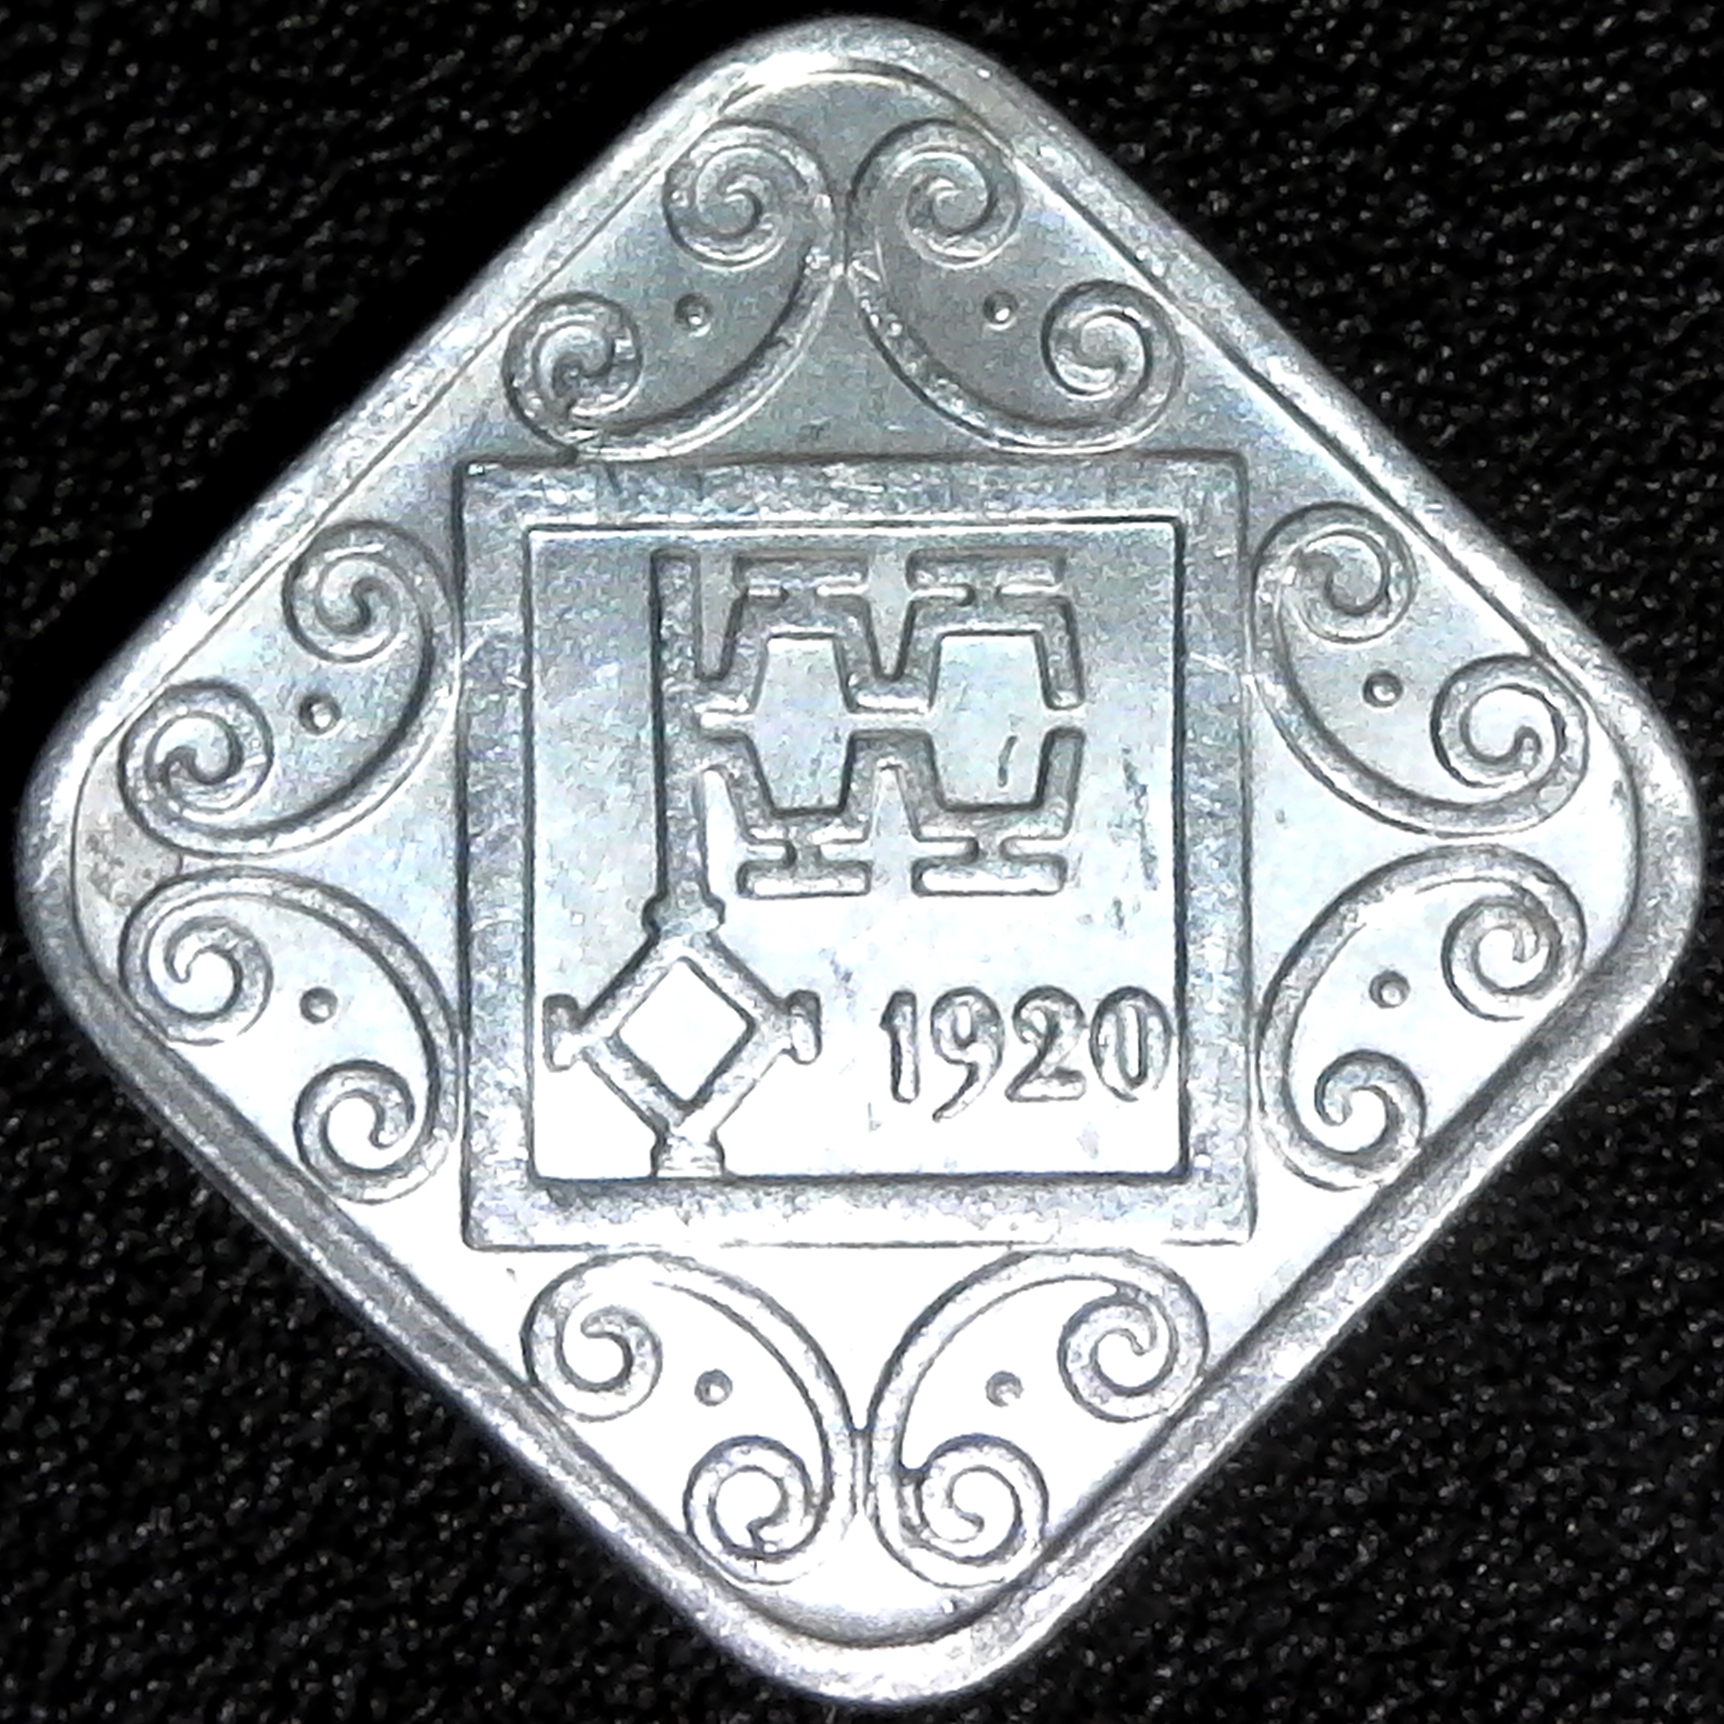 Germany Soest 5 Pfennig 1920 rev.jpg